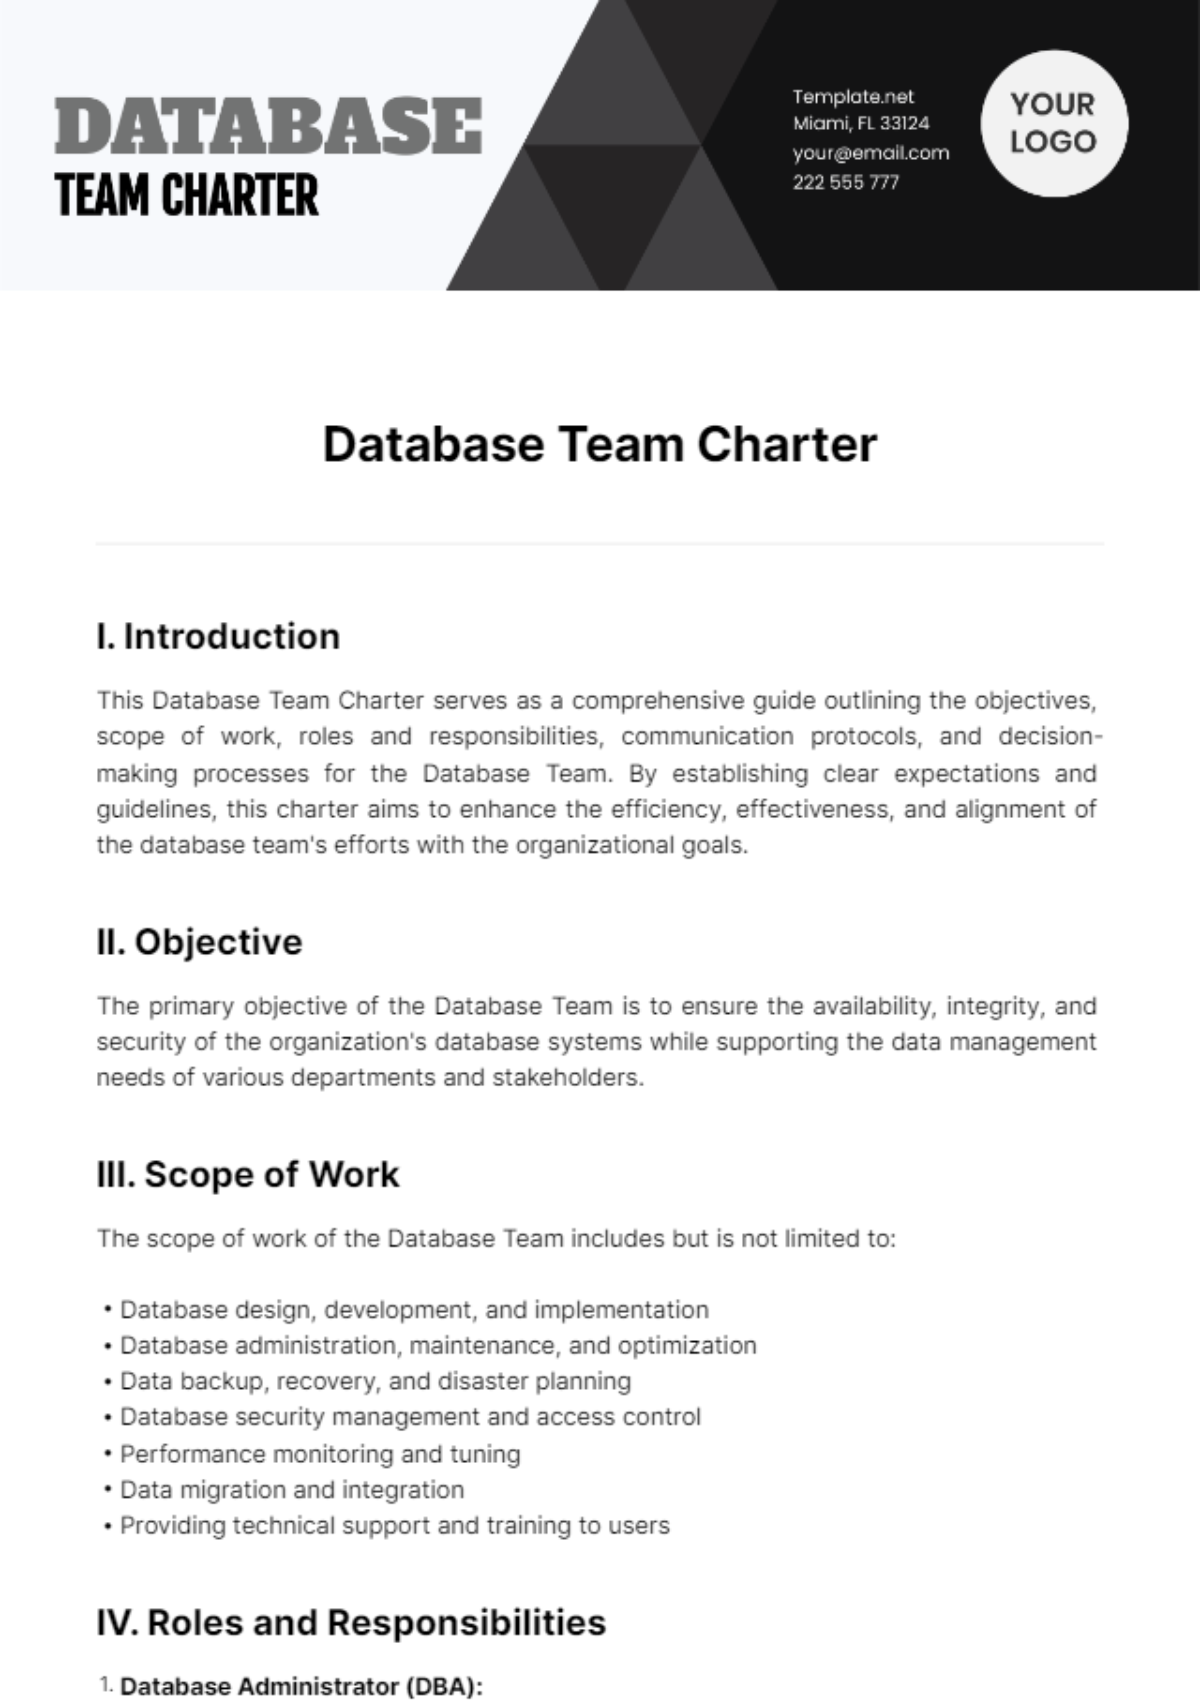 Database Team Charter Template